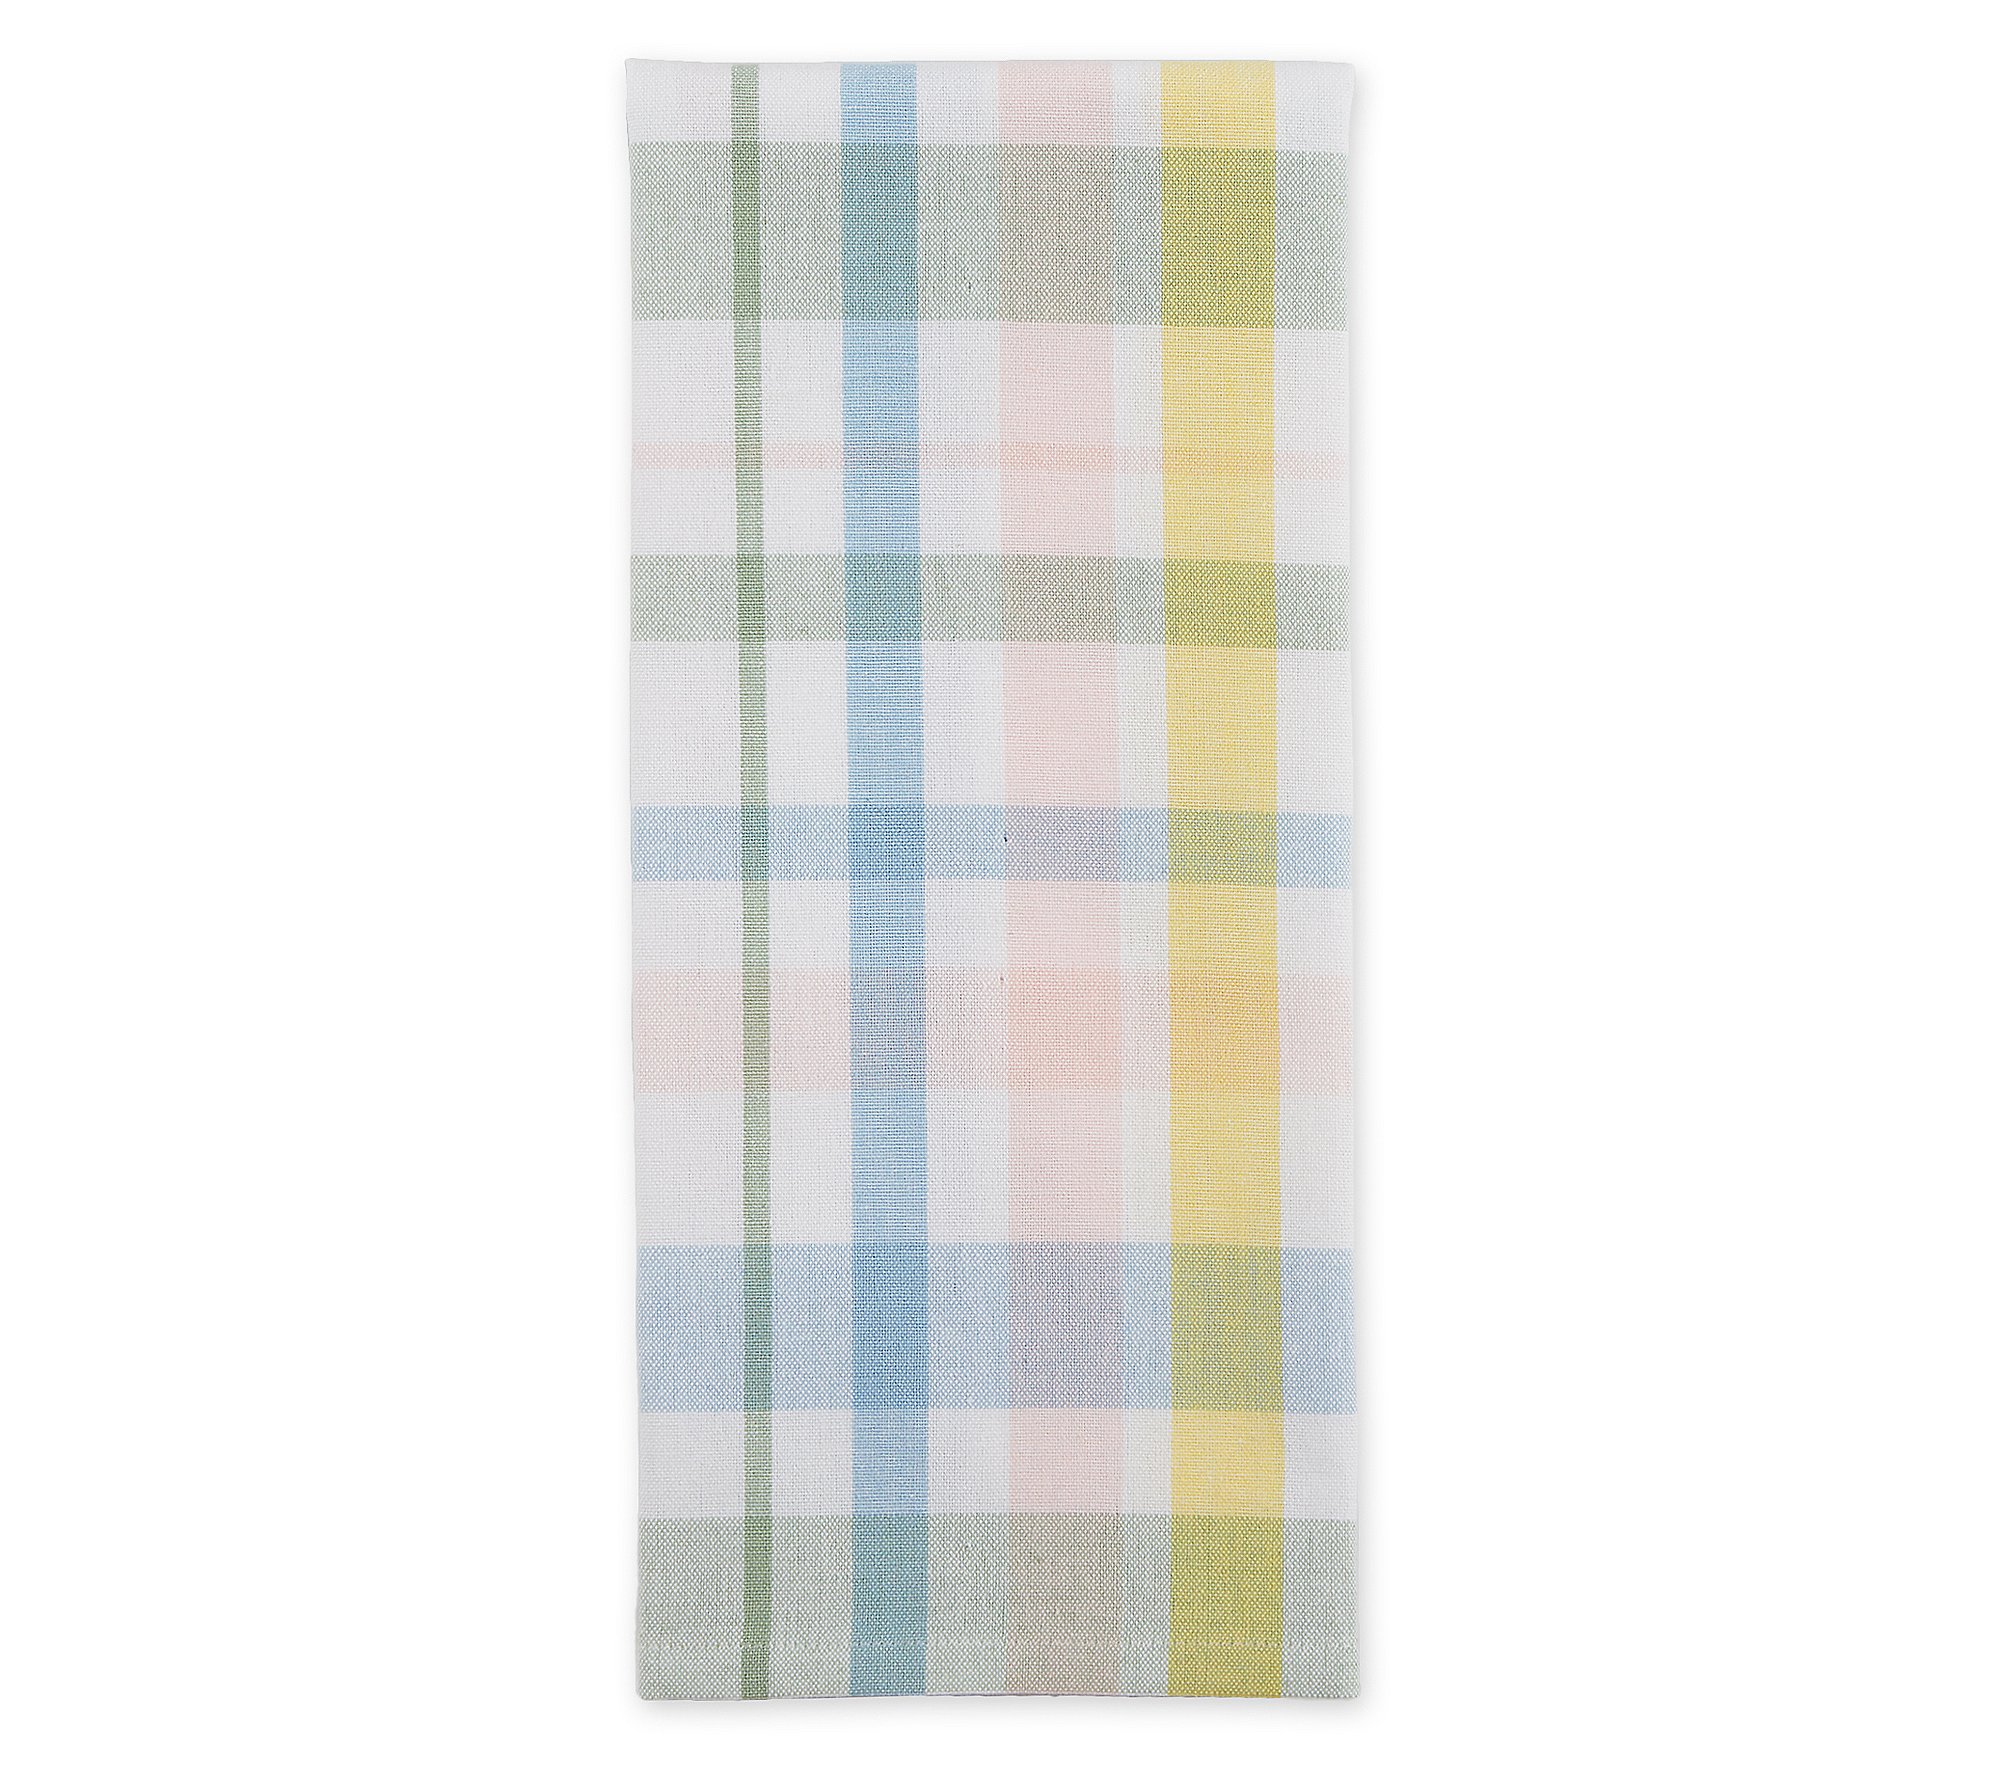 Design Imports Sweet Easter Set of 3 Kitchen Towels